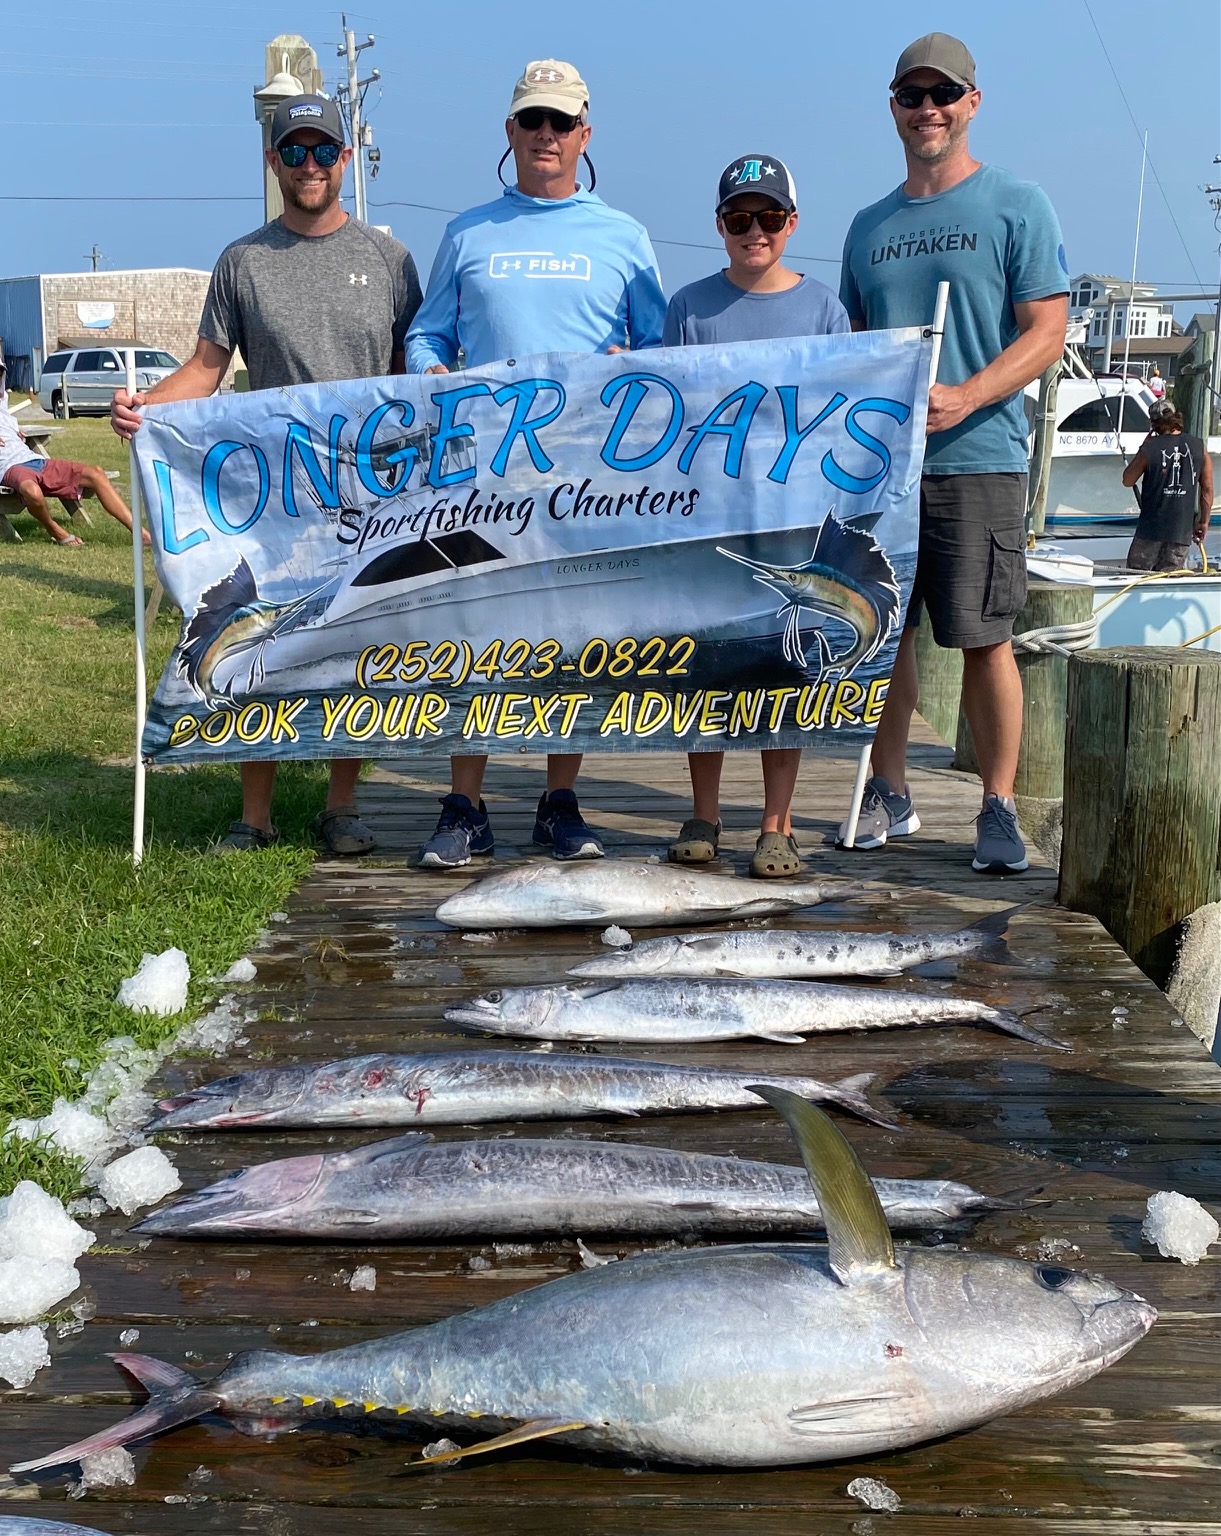 Yellowfin Tuna Longer Days Fishing Charters Teach's Lair